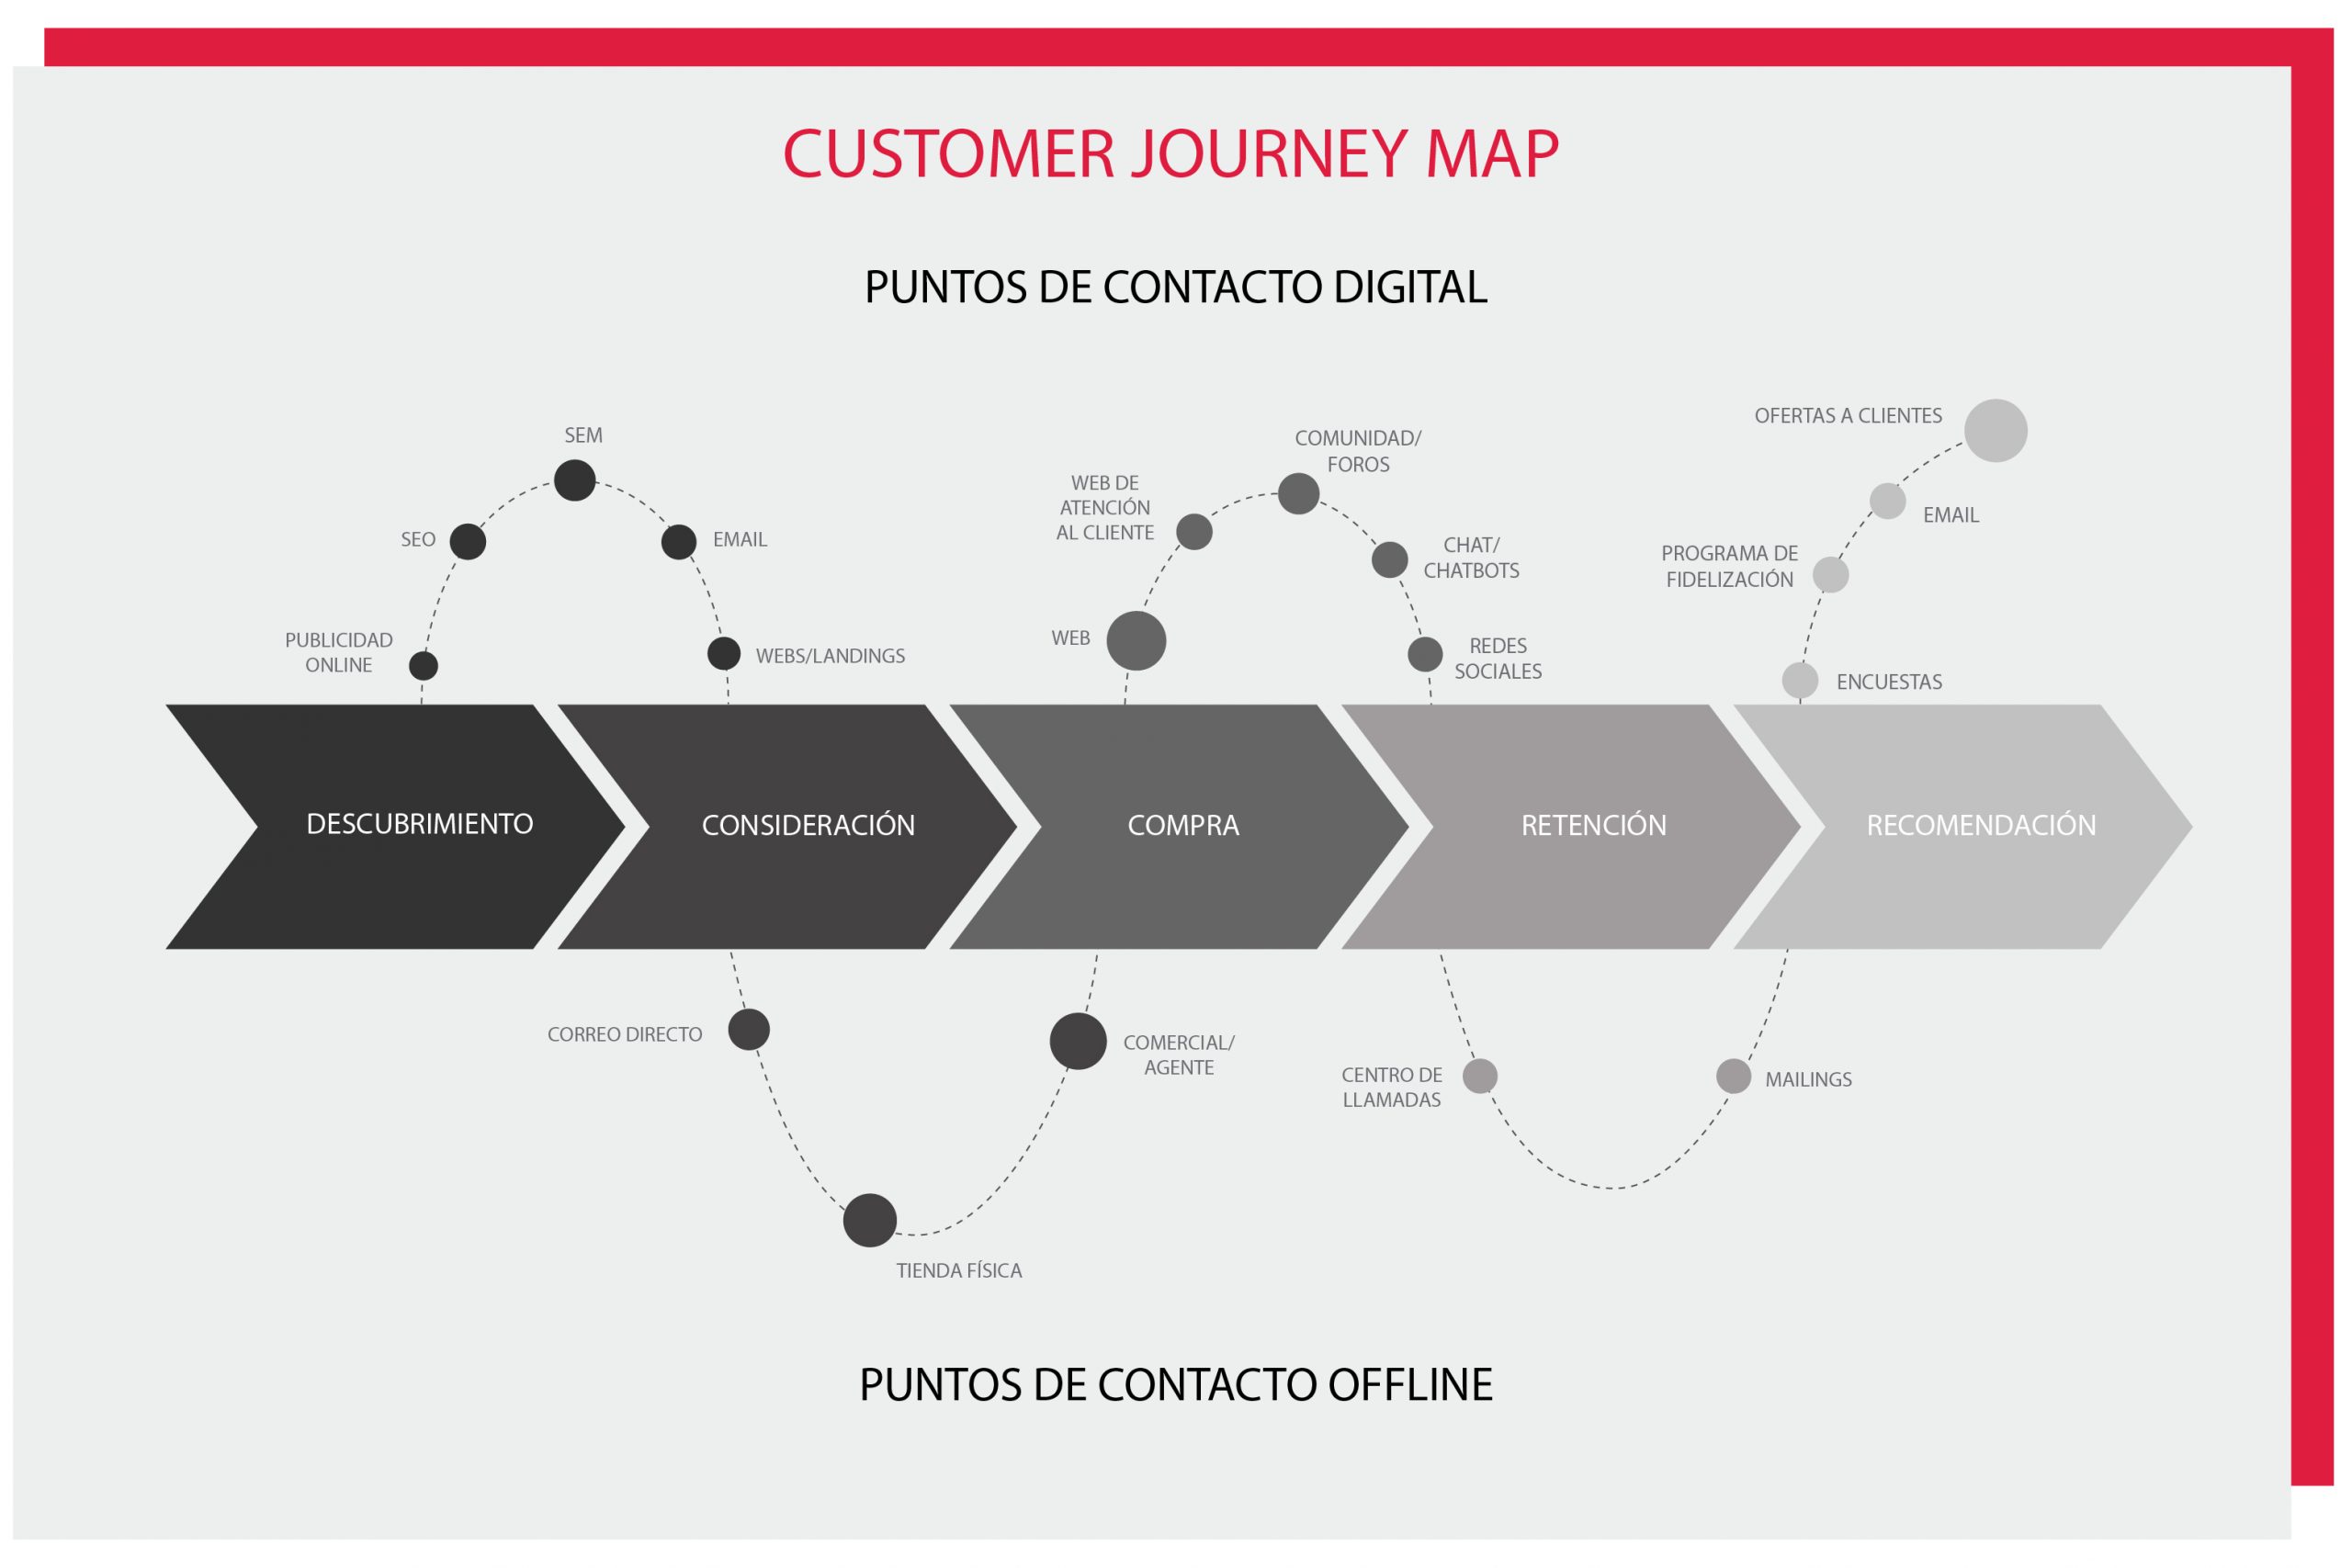 Customey Journey Map